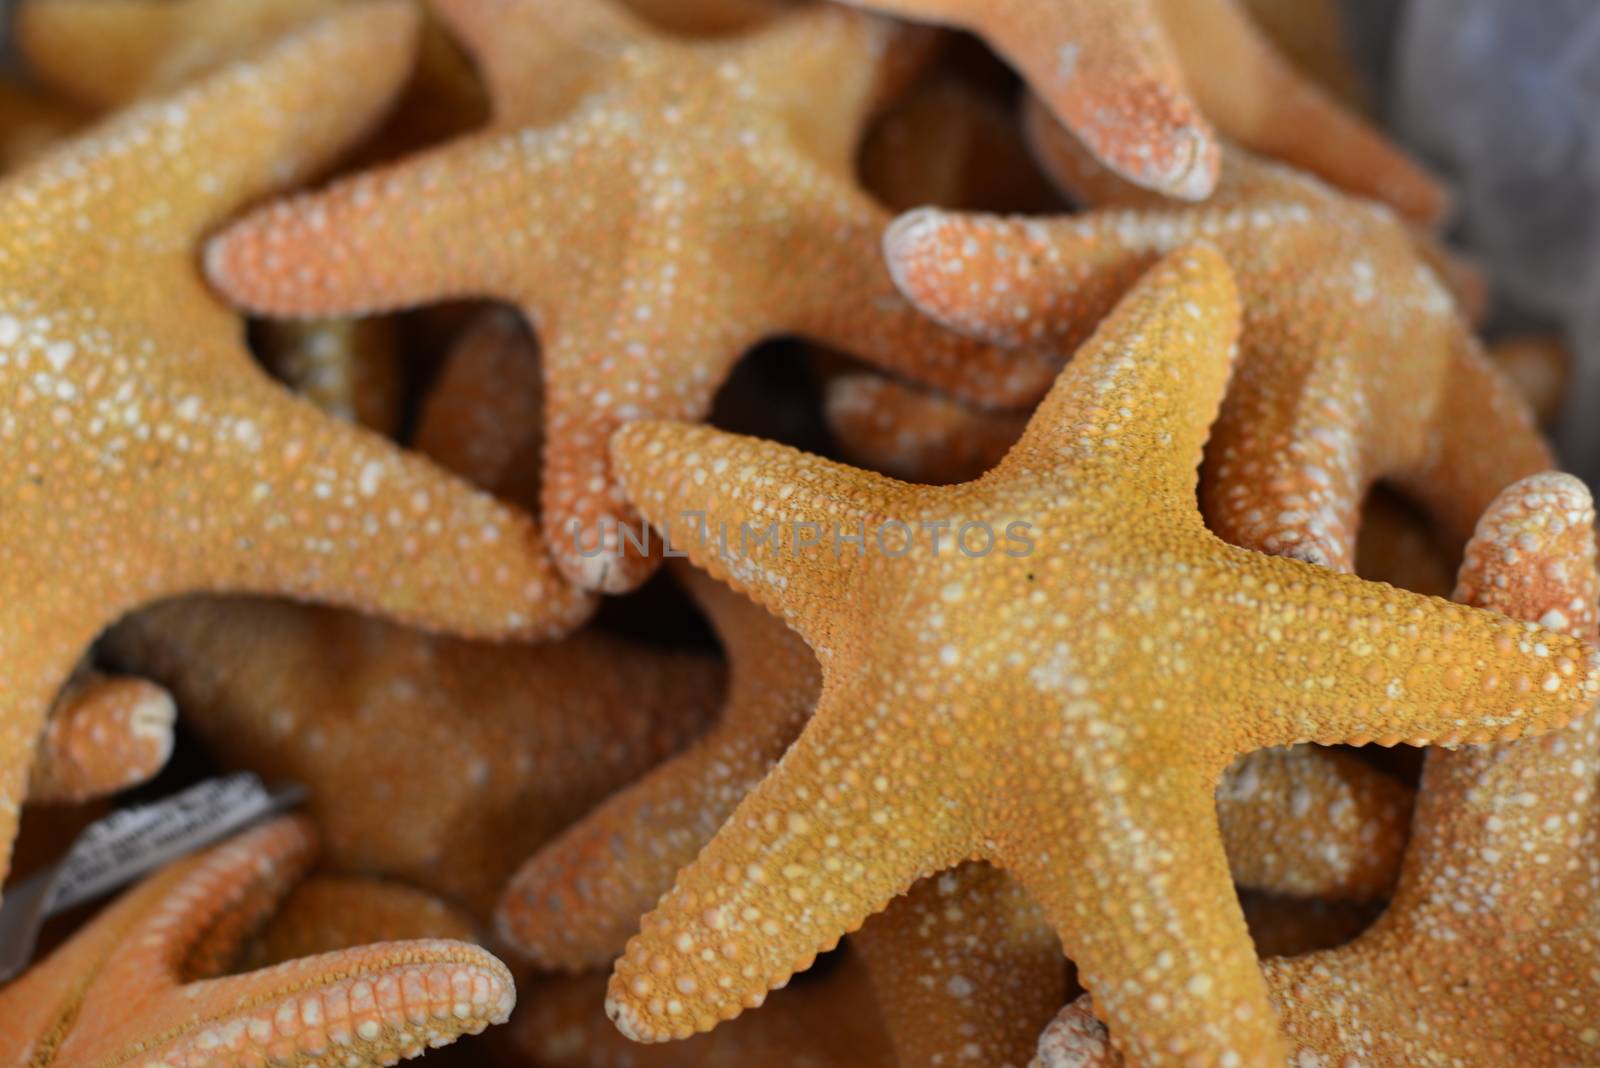 beach conch starfish shell by nikonite